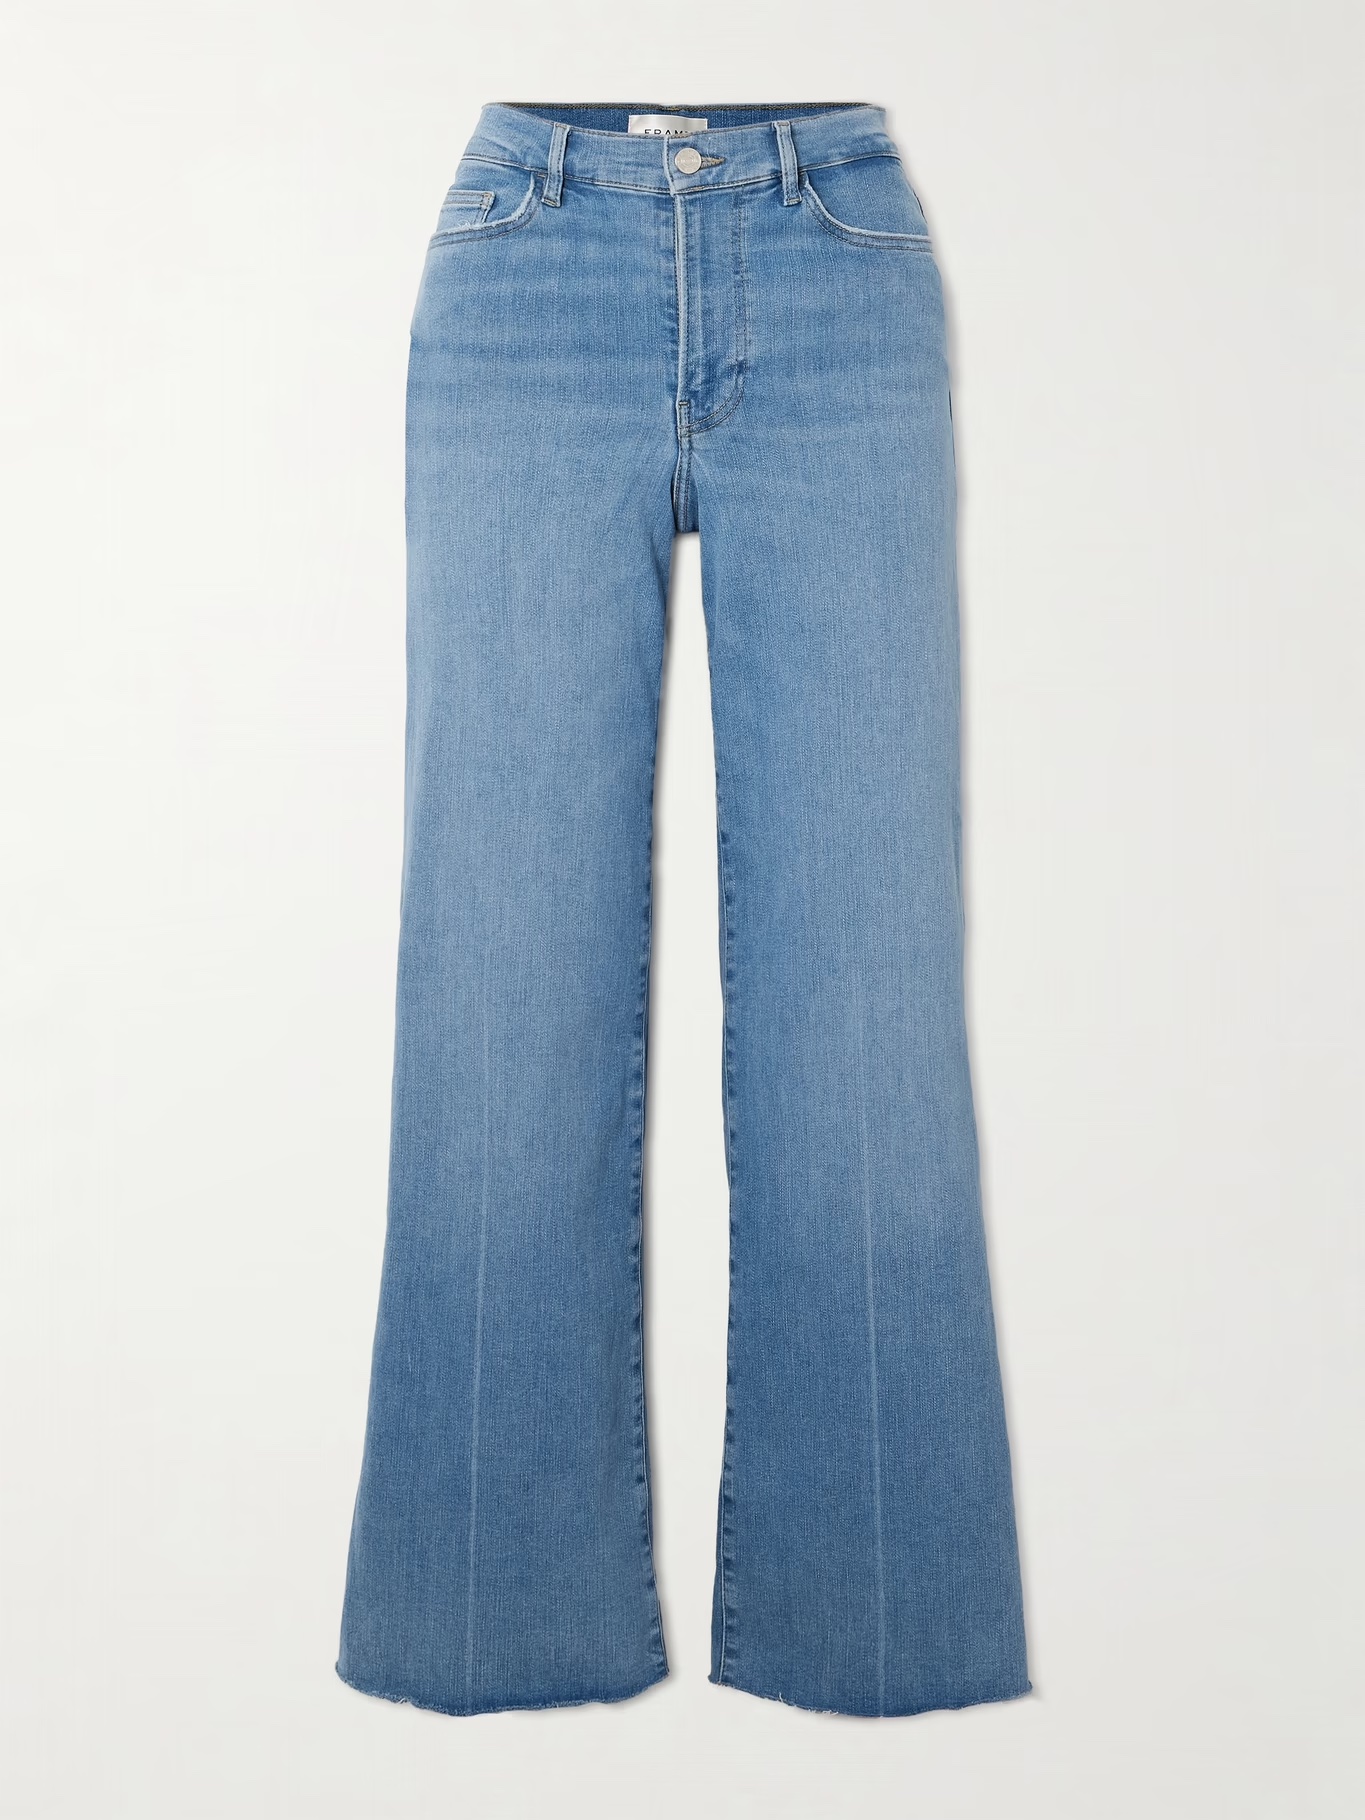 https://www.net-a-porter.com/en-gb/shop/product/frame/clothing/wide-leg/plus-net-sustain-le-slim-palazzo-distressed-high-rise-straight-leg-organic-jeans/1647597335784837